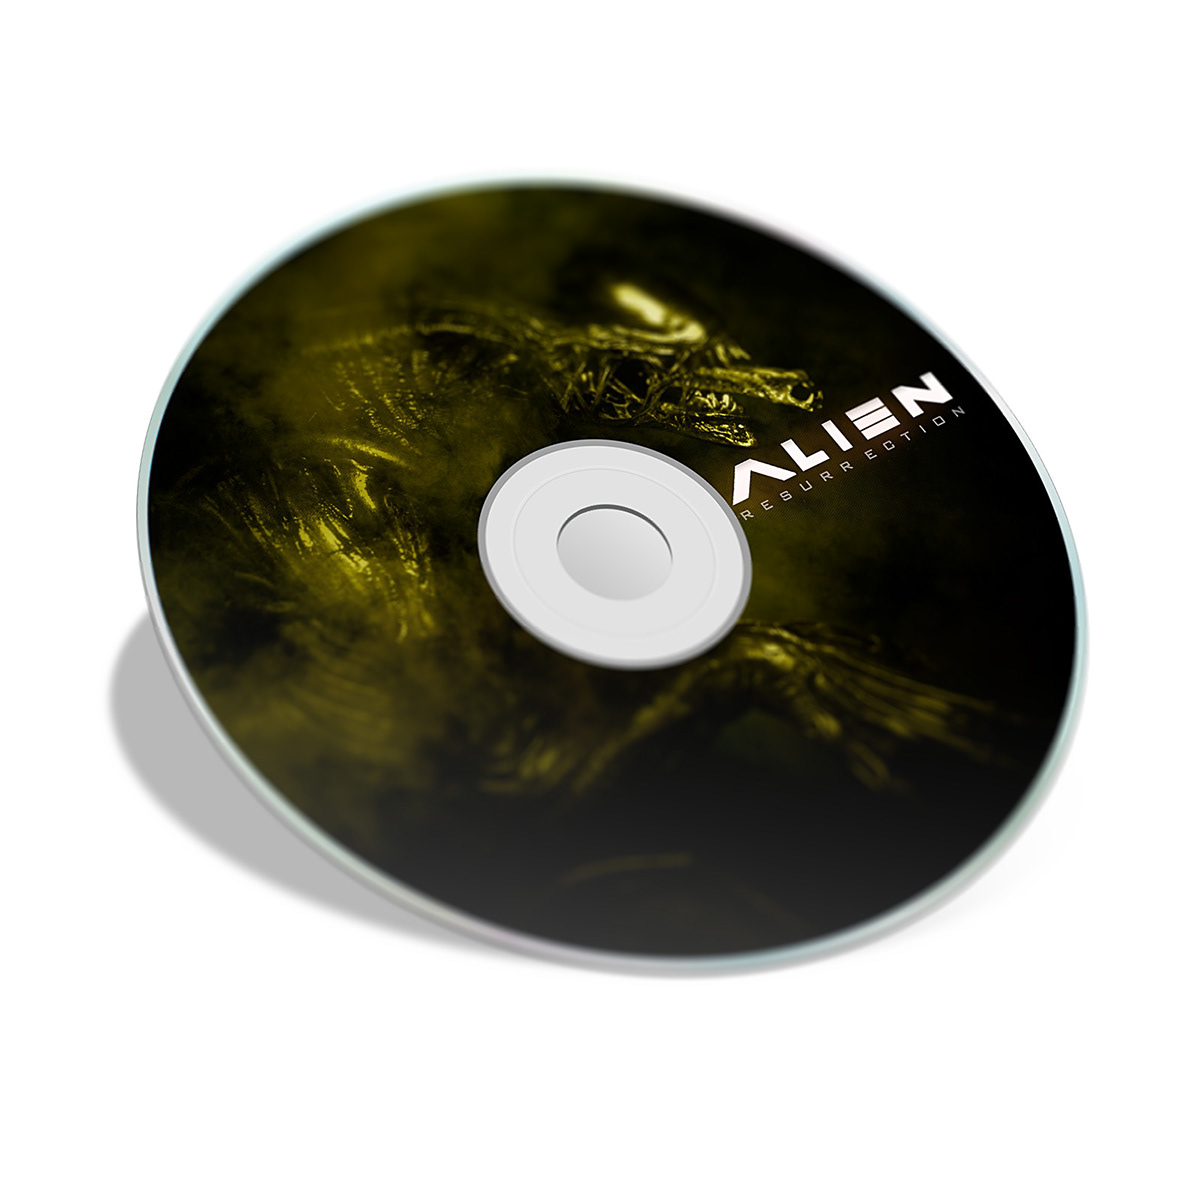 aliens alien DVD Anthology timeline disc Label disc label James Cameron home entertainment